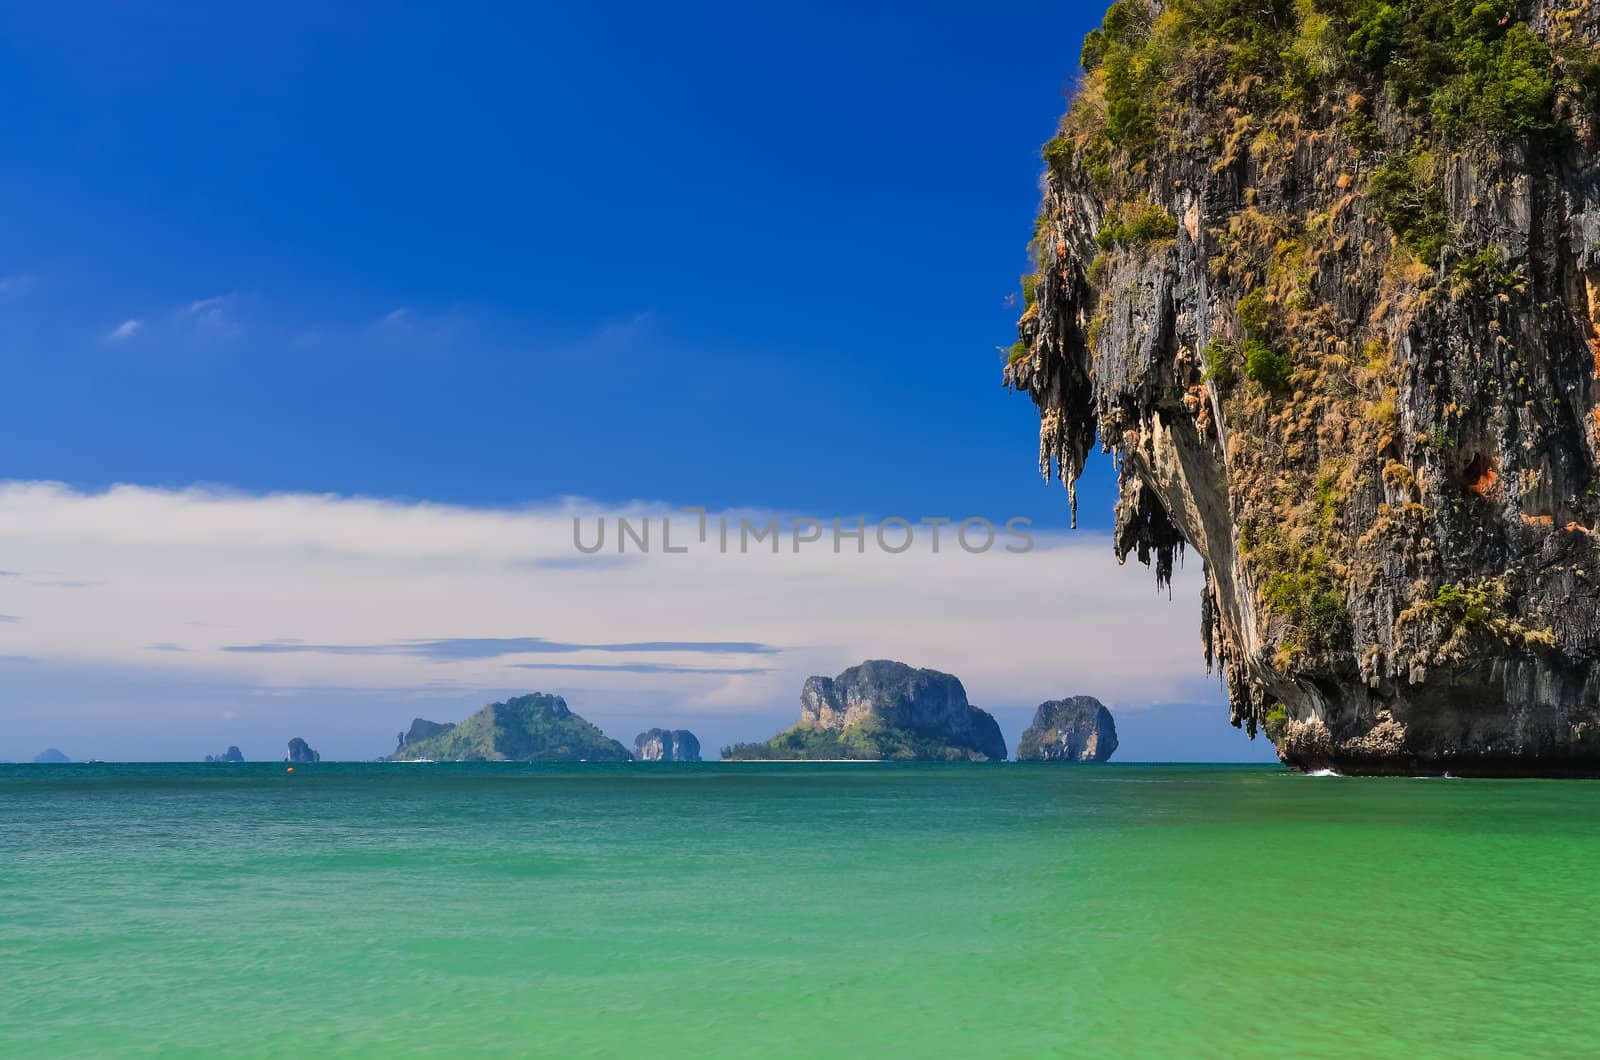 Ocean coast landscape with cliffs and islands at Phra Nang bay, Krabi, Thailand